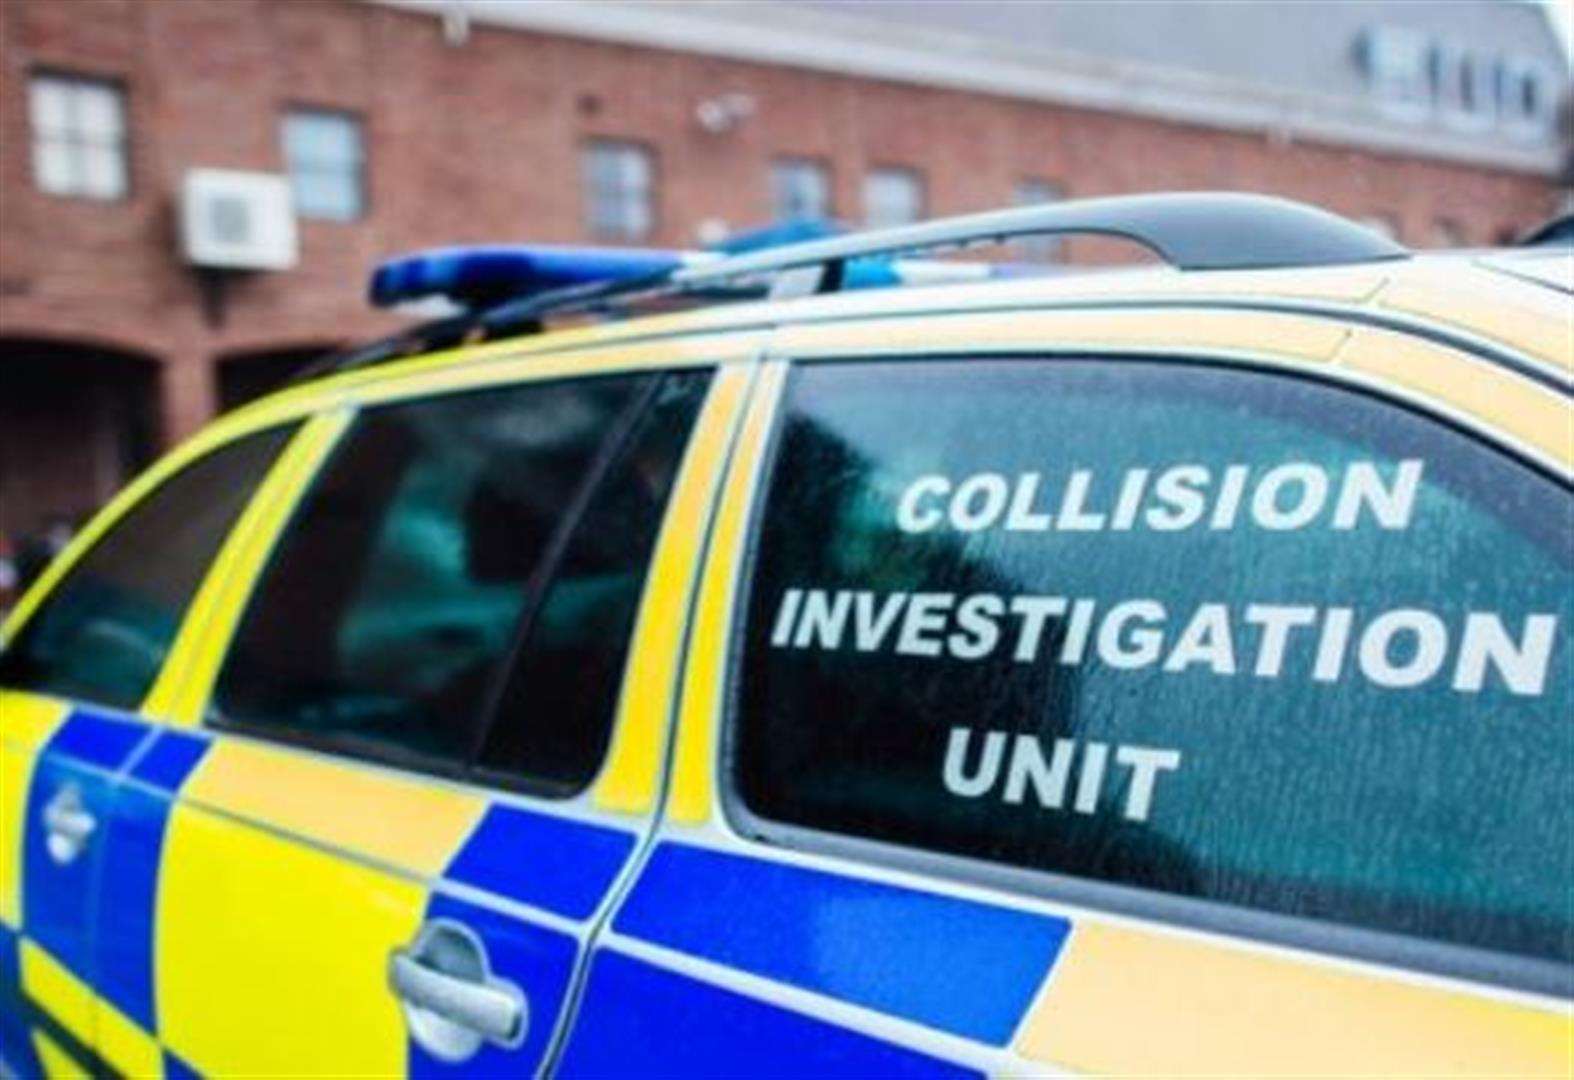 Kent Police collision investigation unit - Stock Image (2751056)